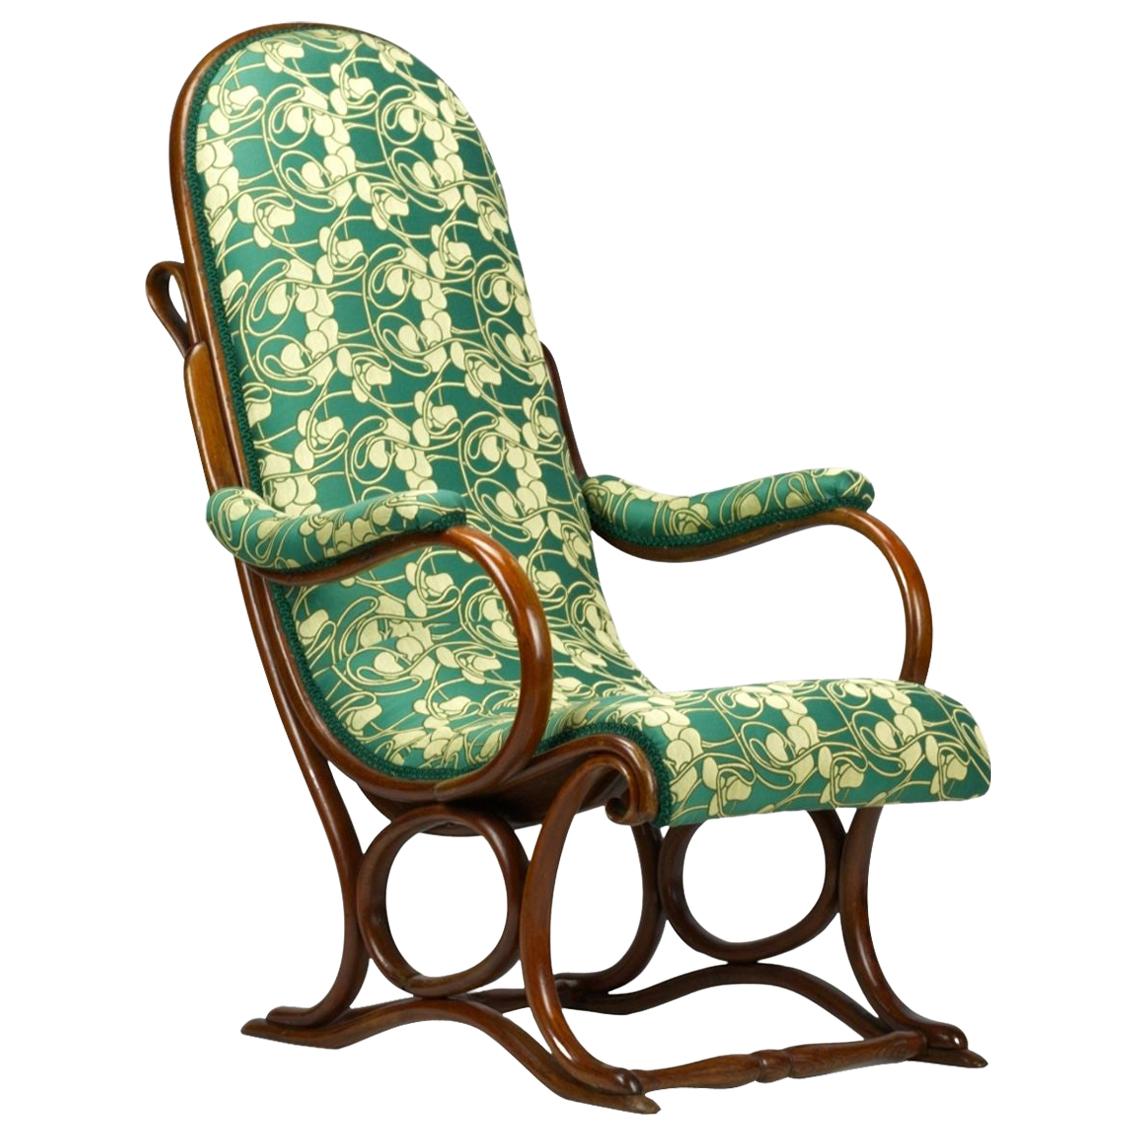 Art Nouveau Bentwood Salonfauteuil Easy Chair / Armchair Thonet No. 1 circa 1890